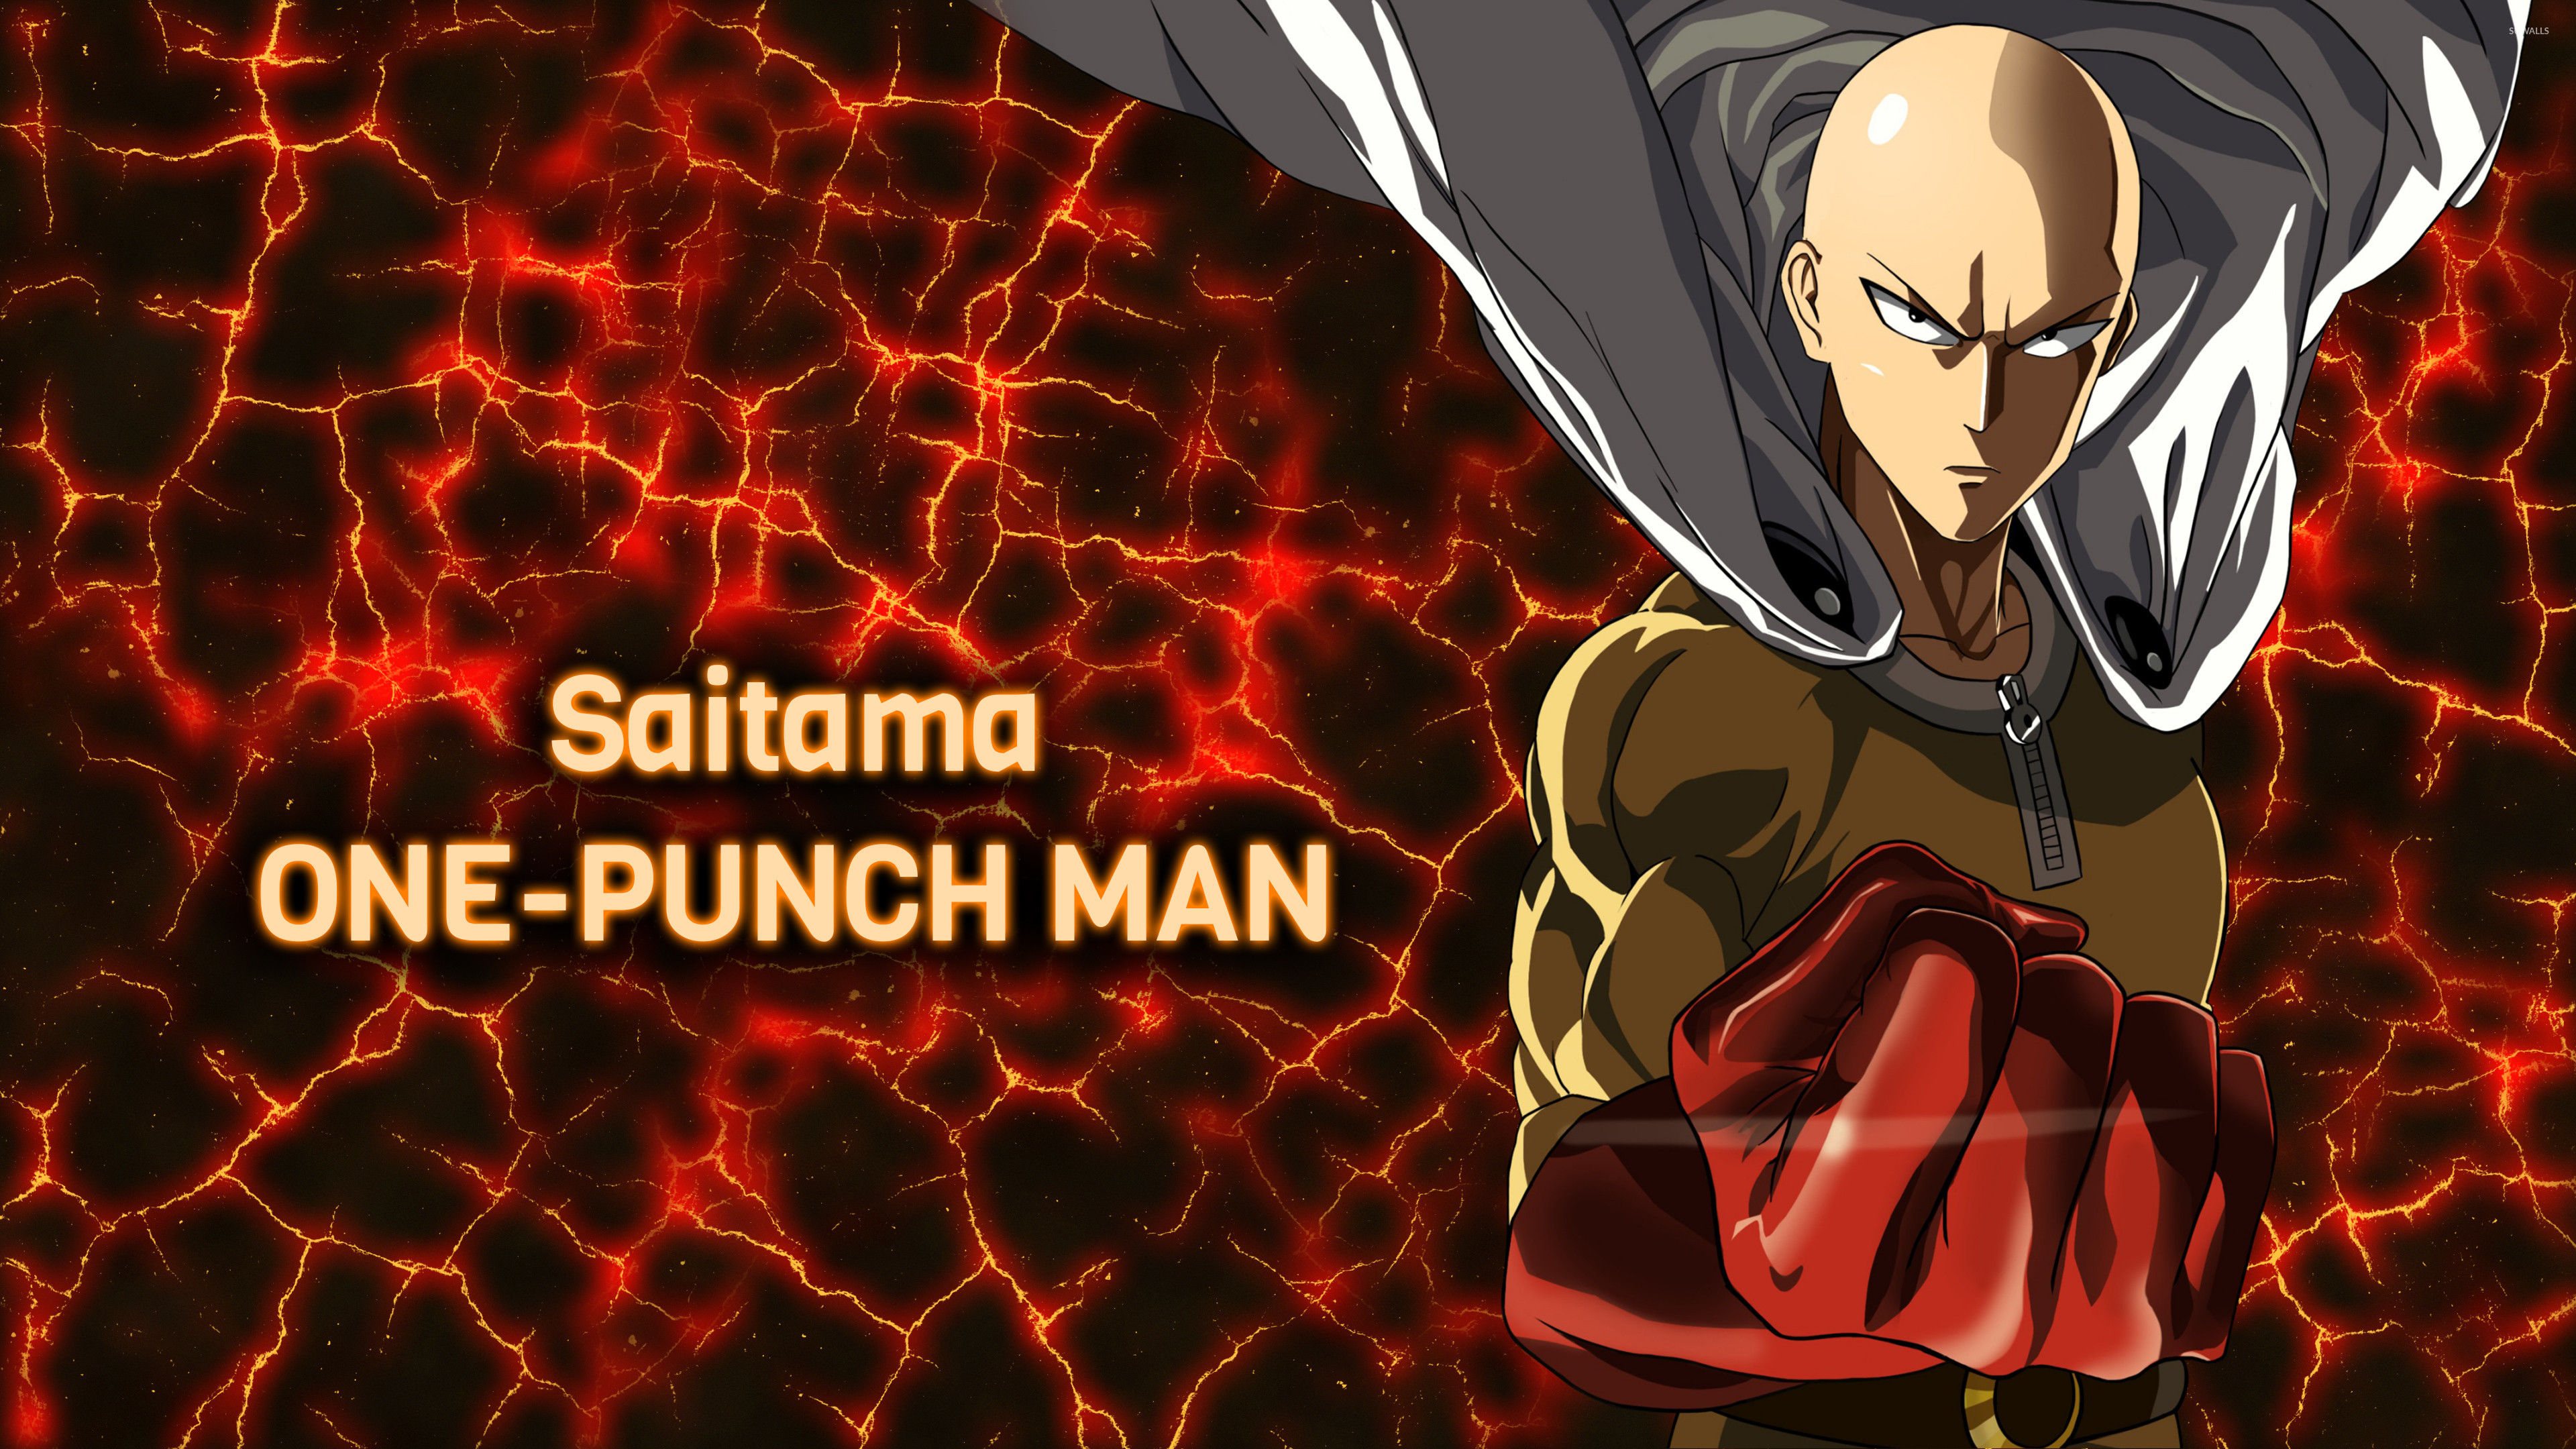 3840x2160 Angry Saitama in One-Punch Man wallpaper